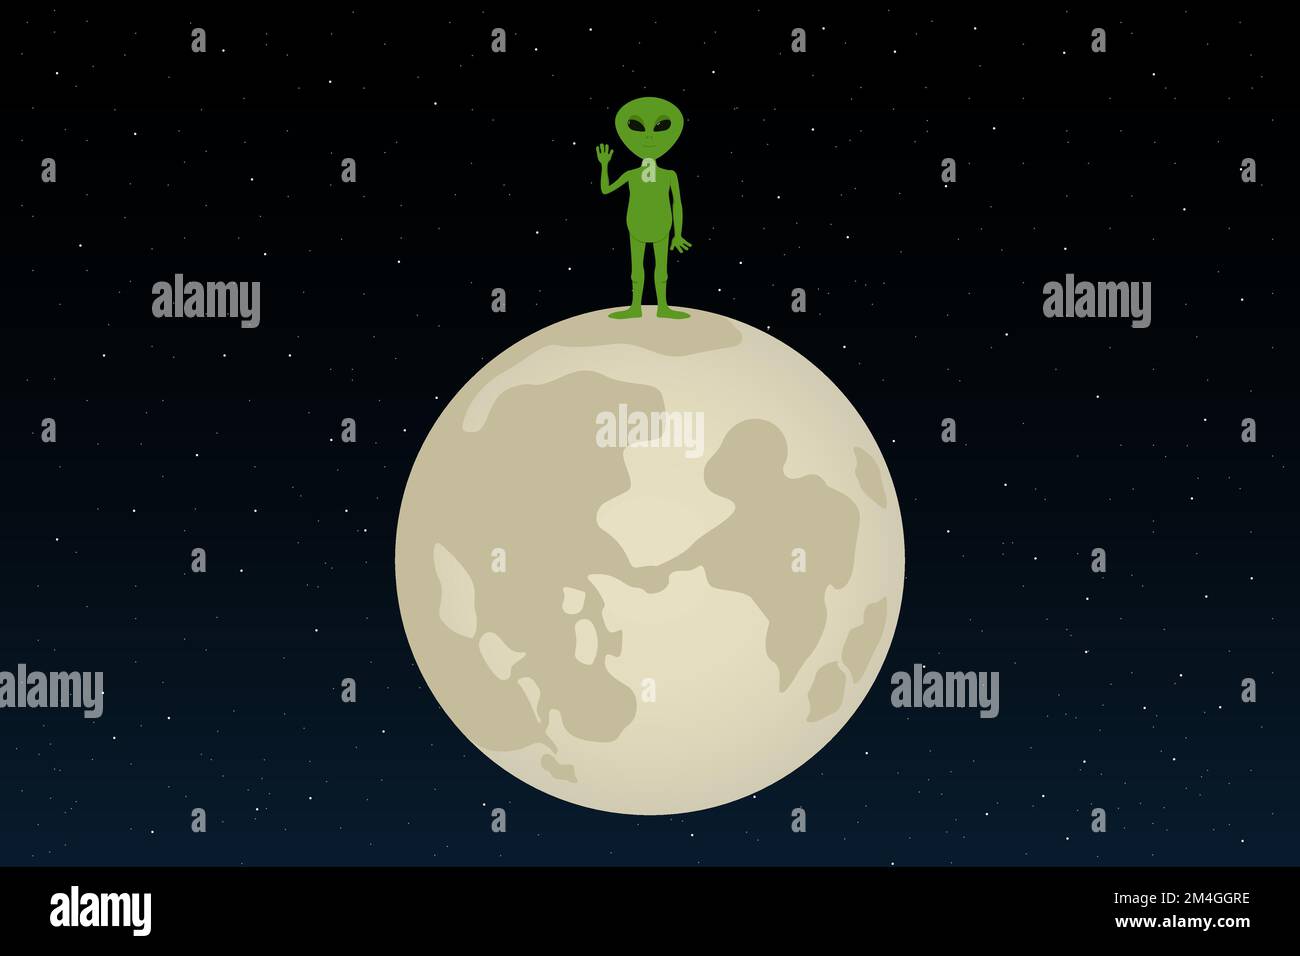 Green alien stand on moon with raised hand. Cartoon style. Vector illustration. Stock Vector